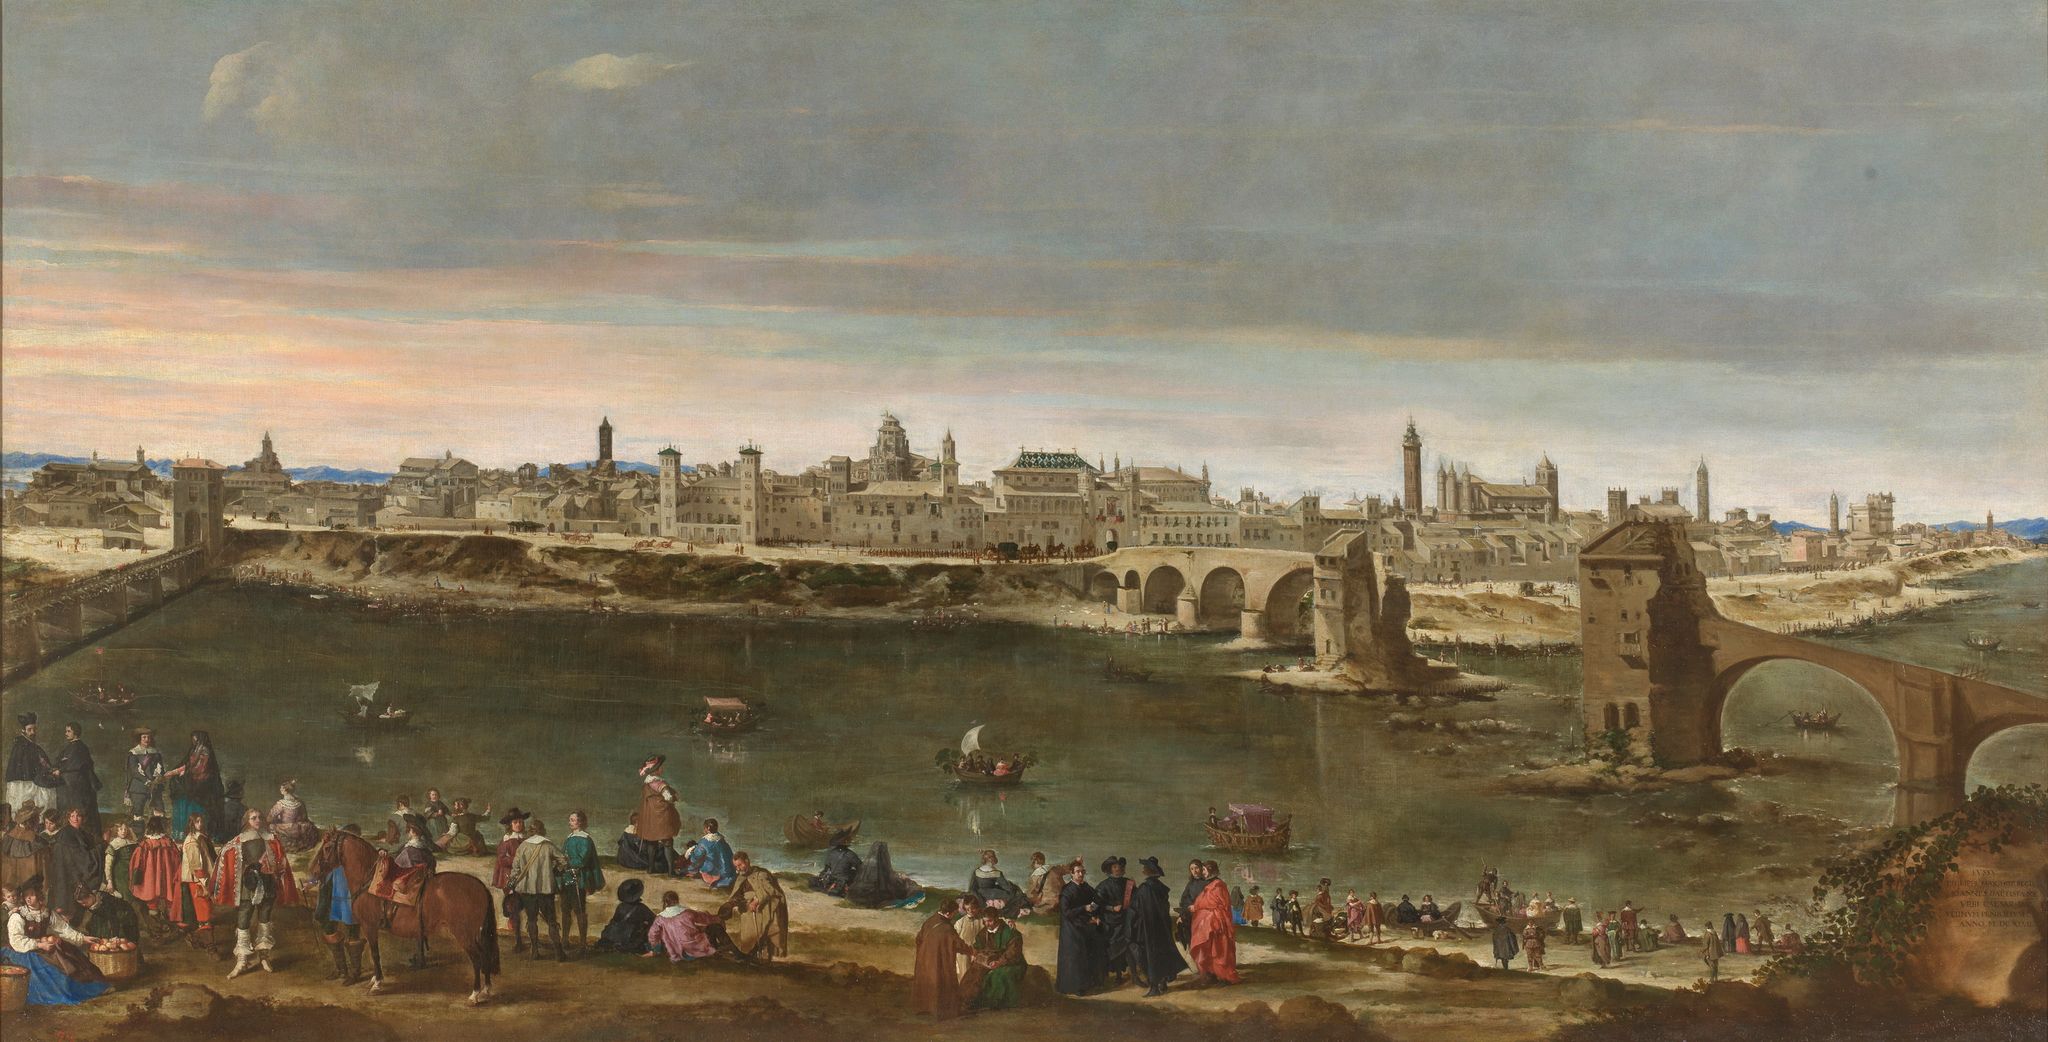 Vista de Zaragoza en 1647